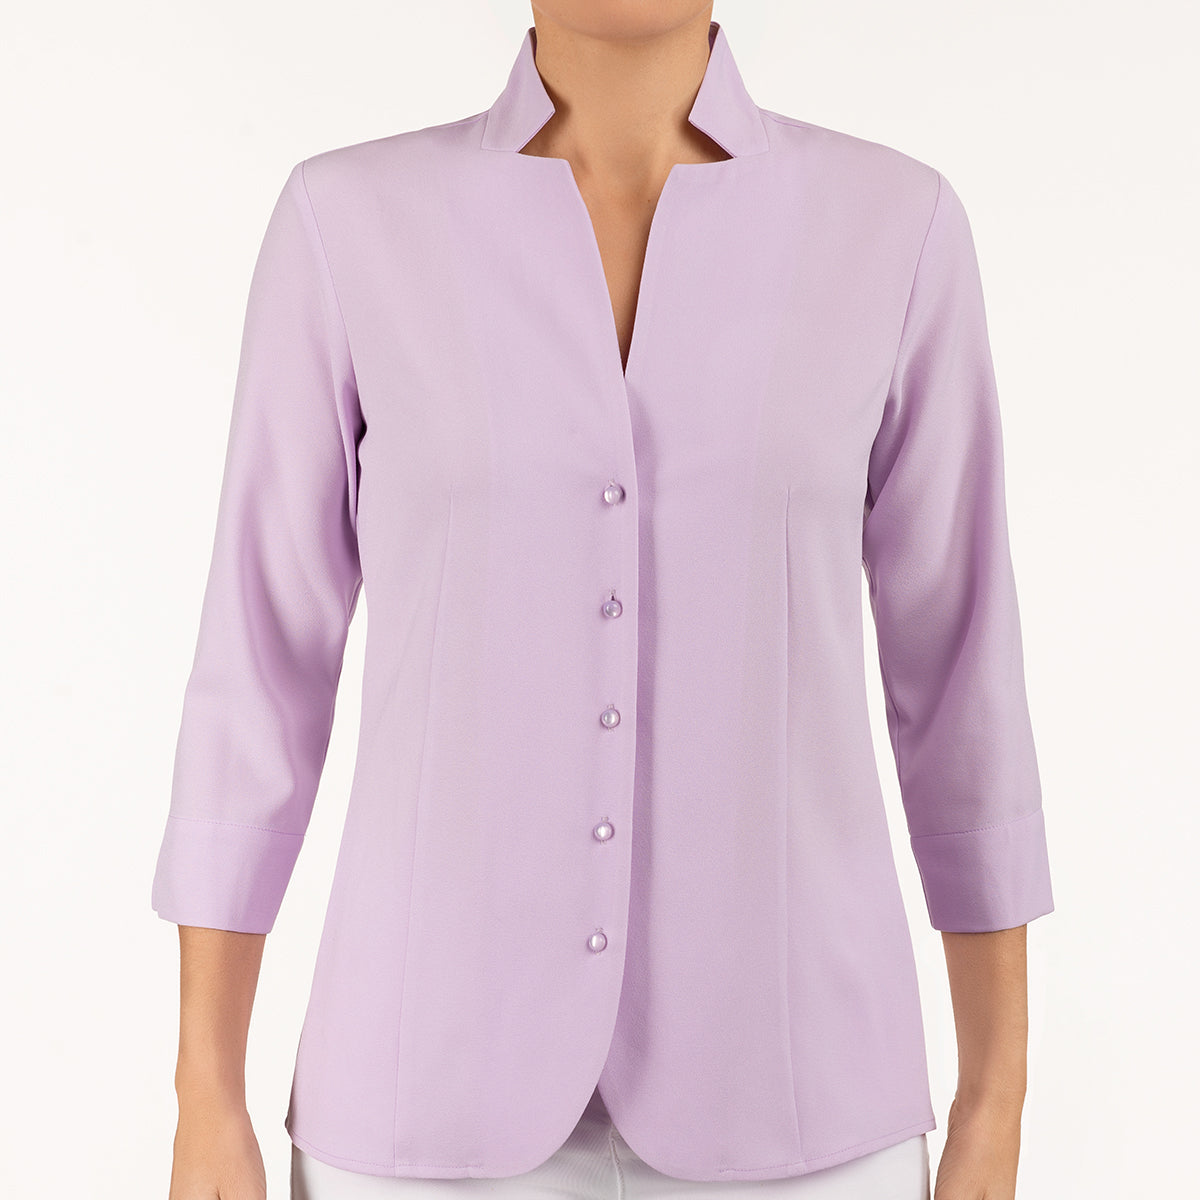 – Lilac in Notch Collar Shirt Leggiadro Inverted